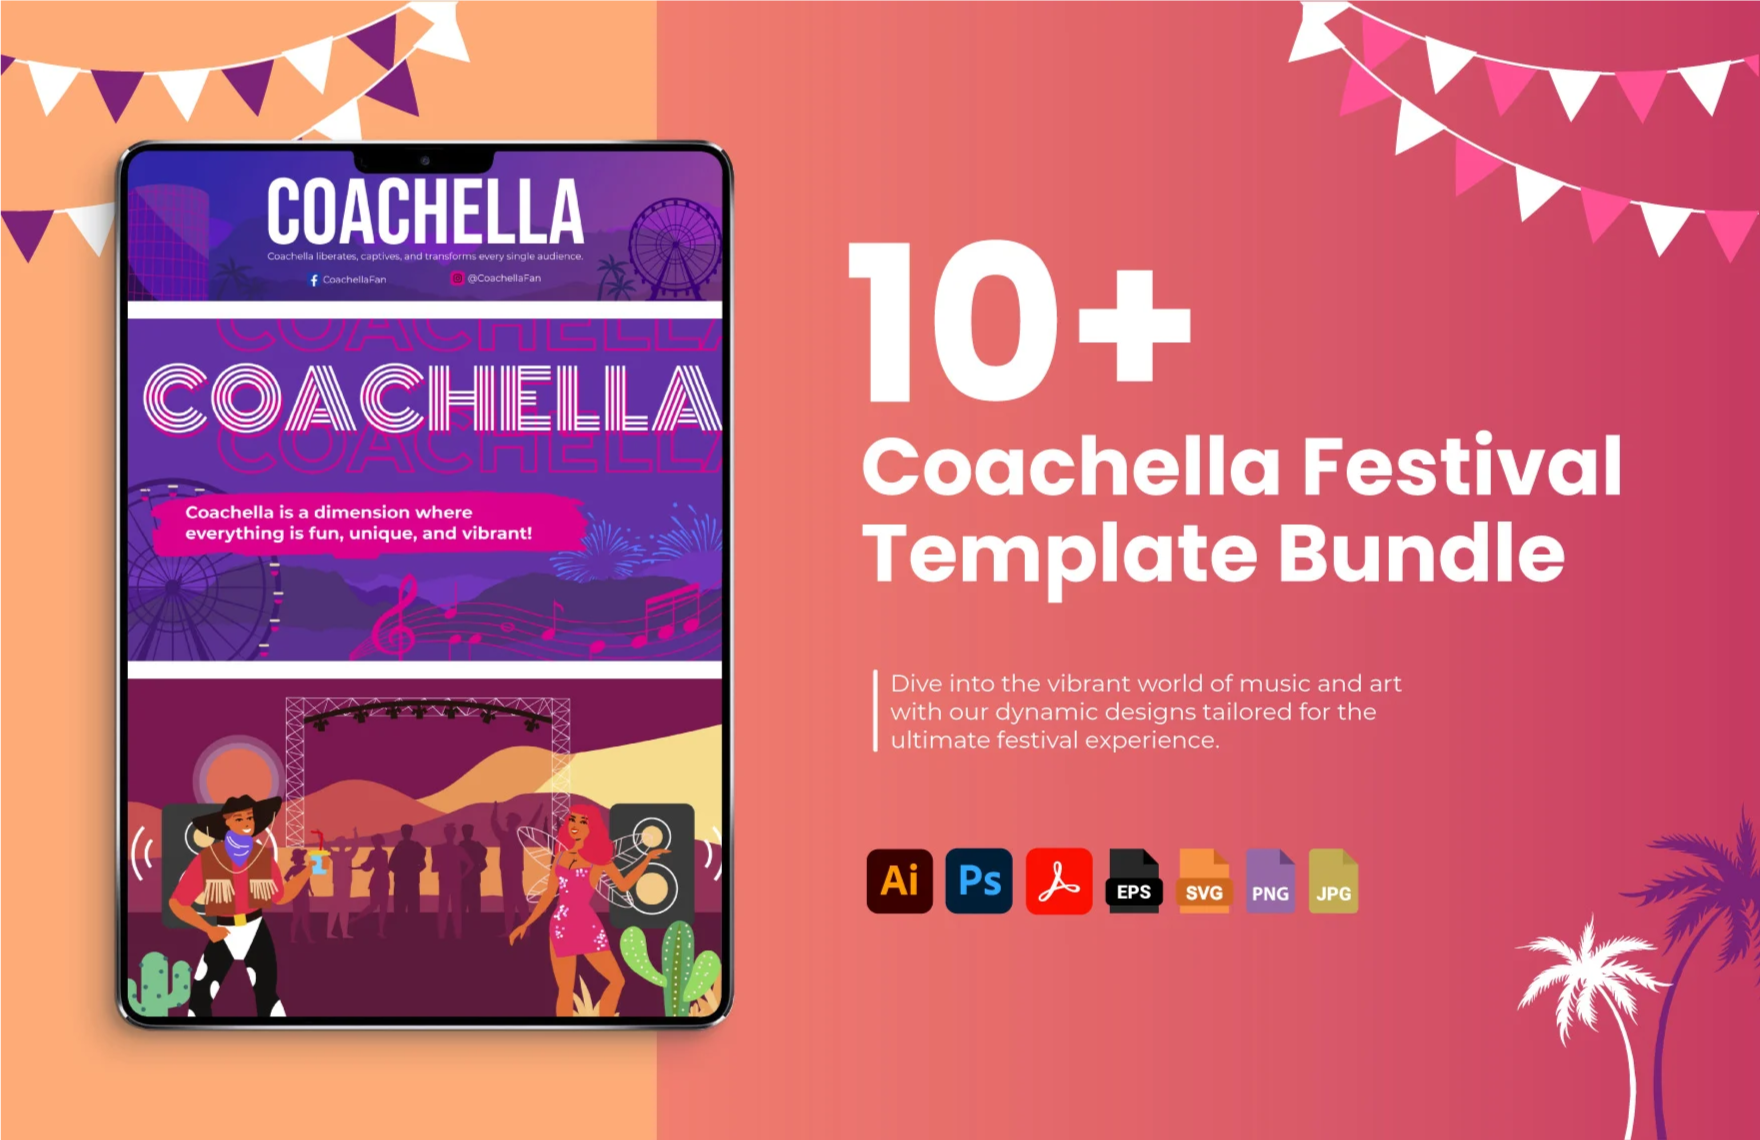 10+ Coachella Festival Template Bundle